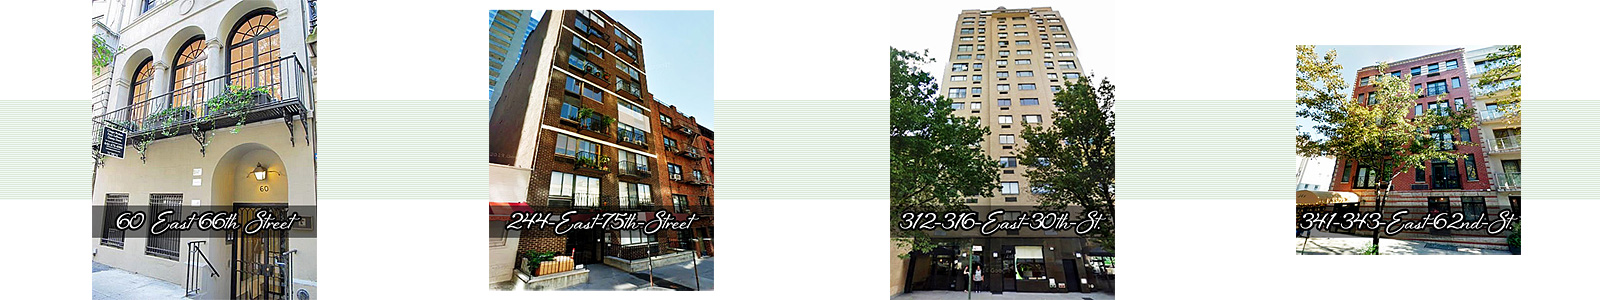 NY real estate slideshow b4